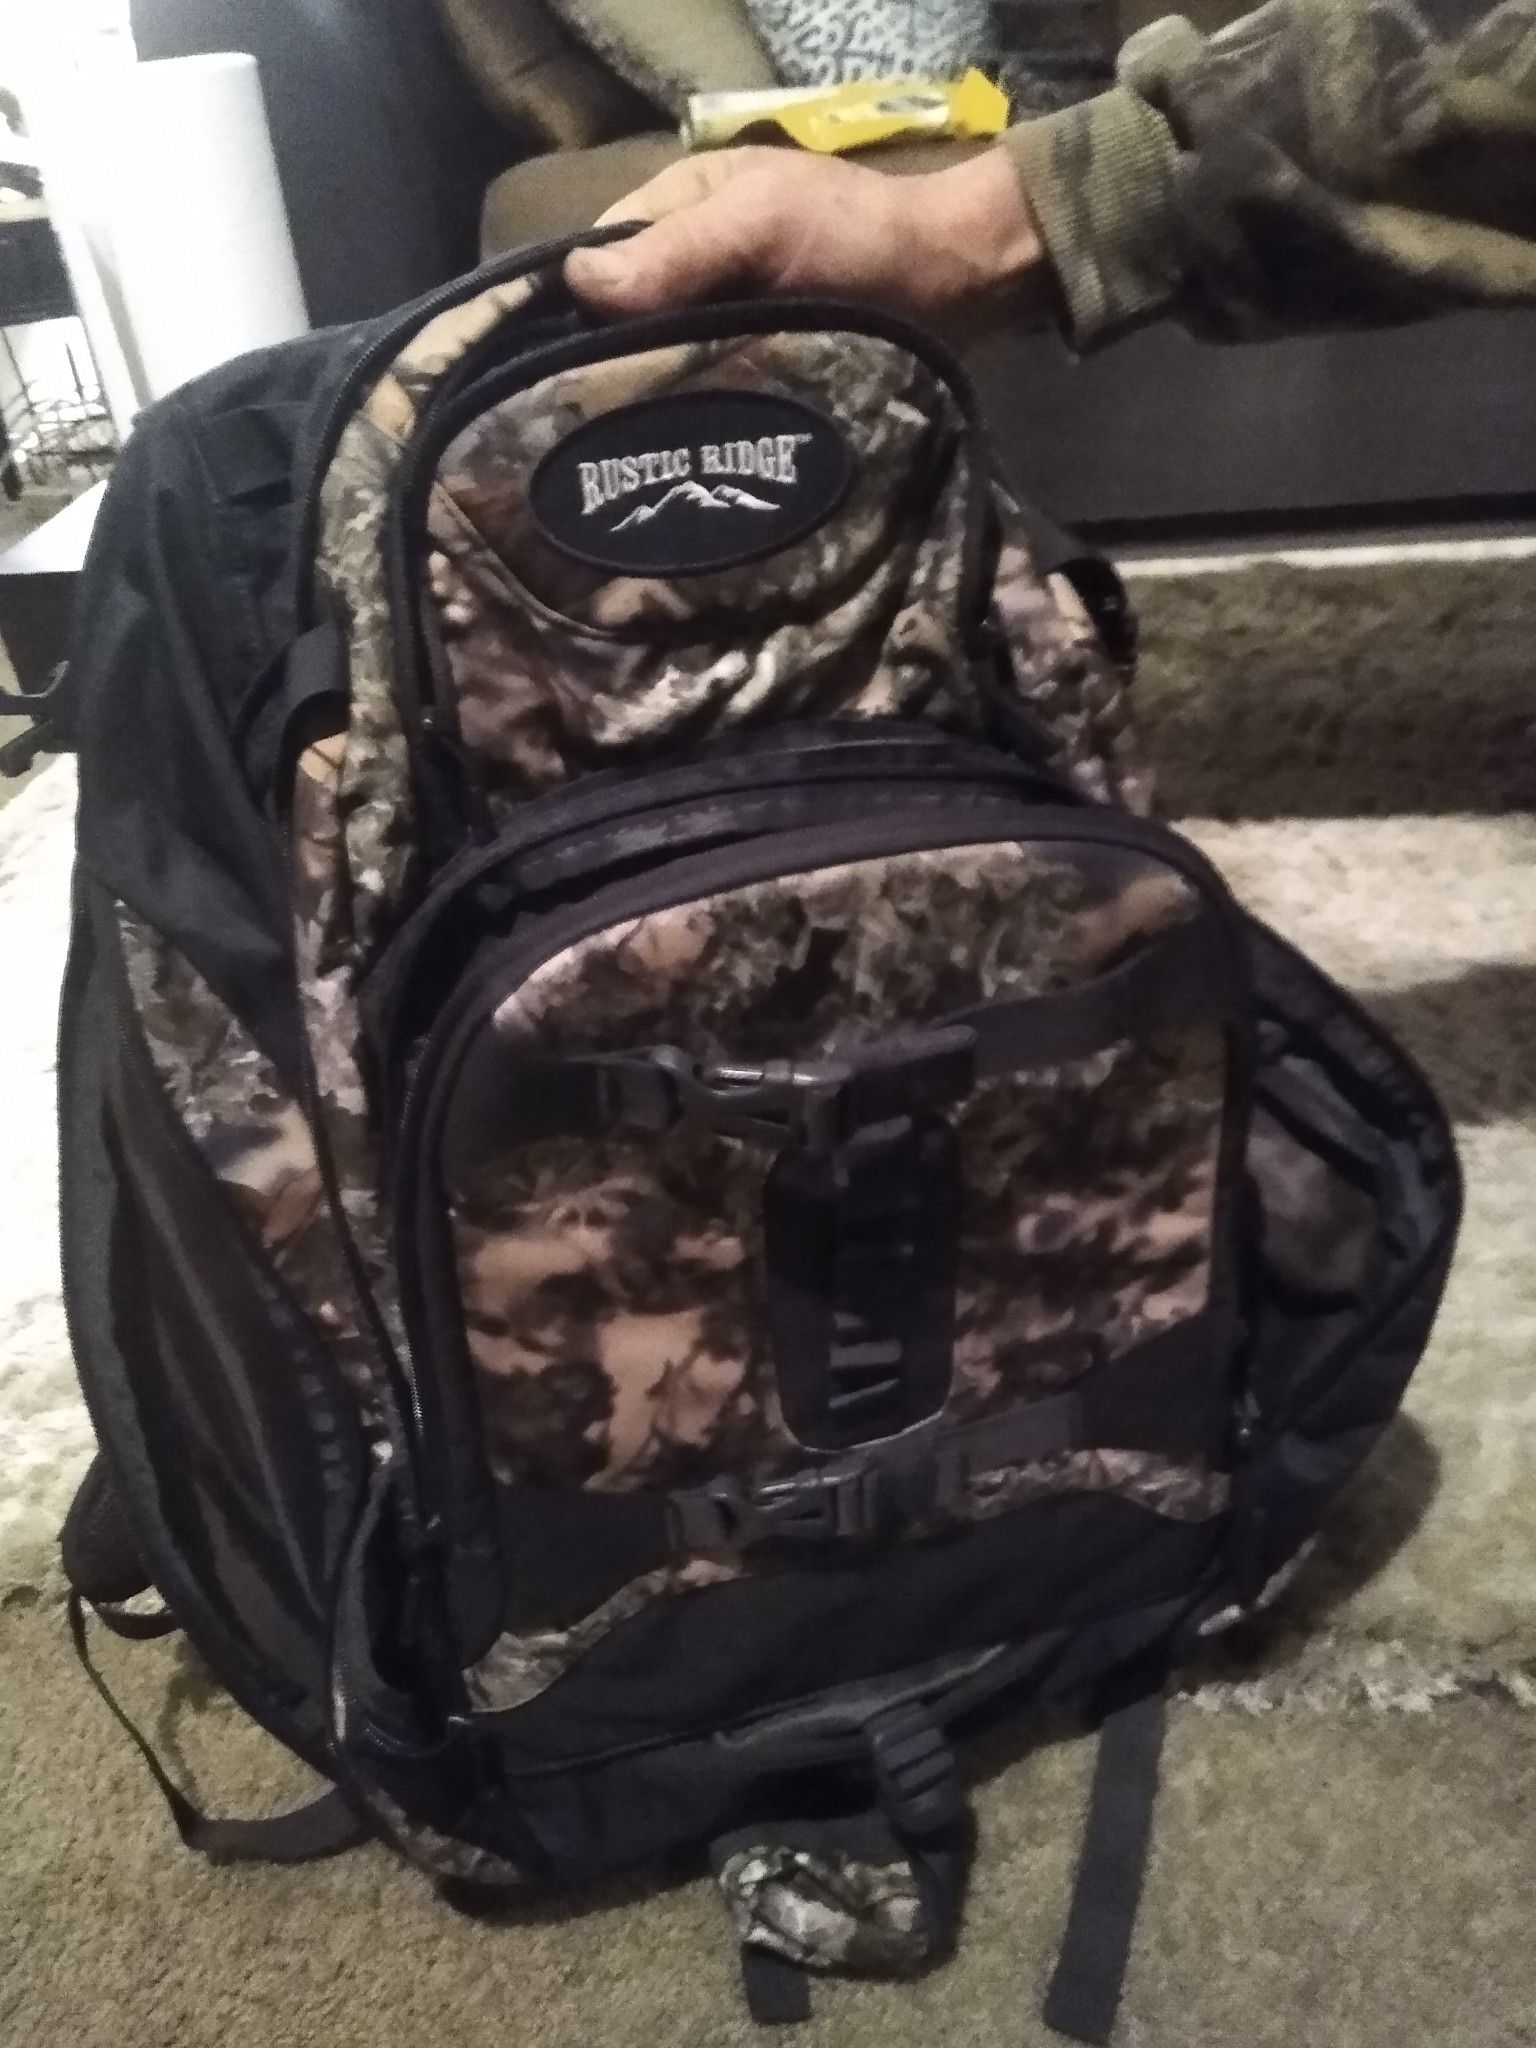 Rustic ridge camo soft pack internal frame backpack, hunting bag